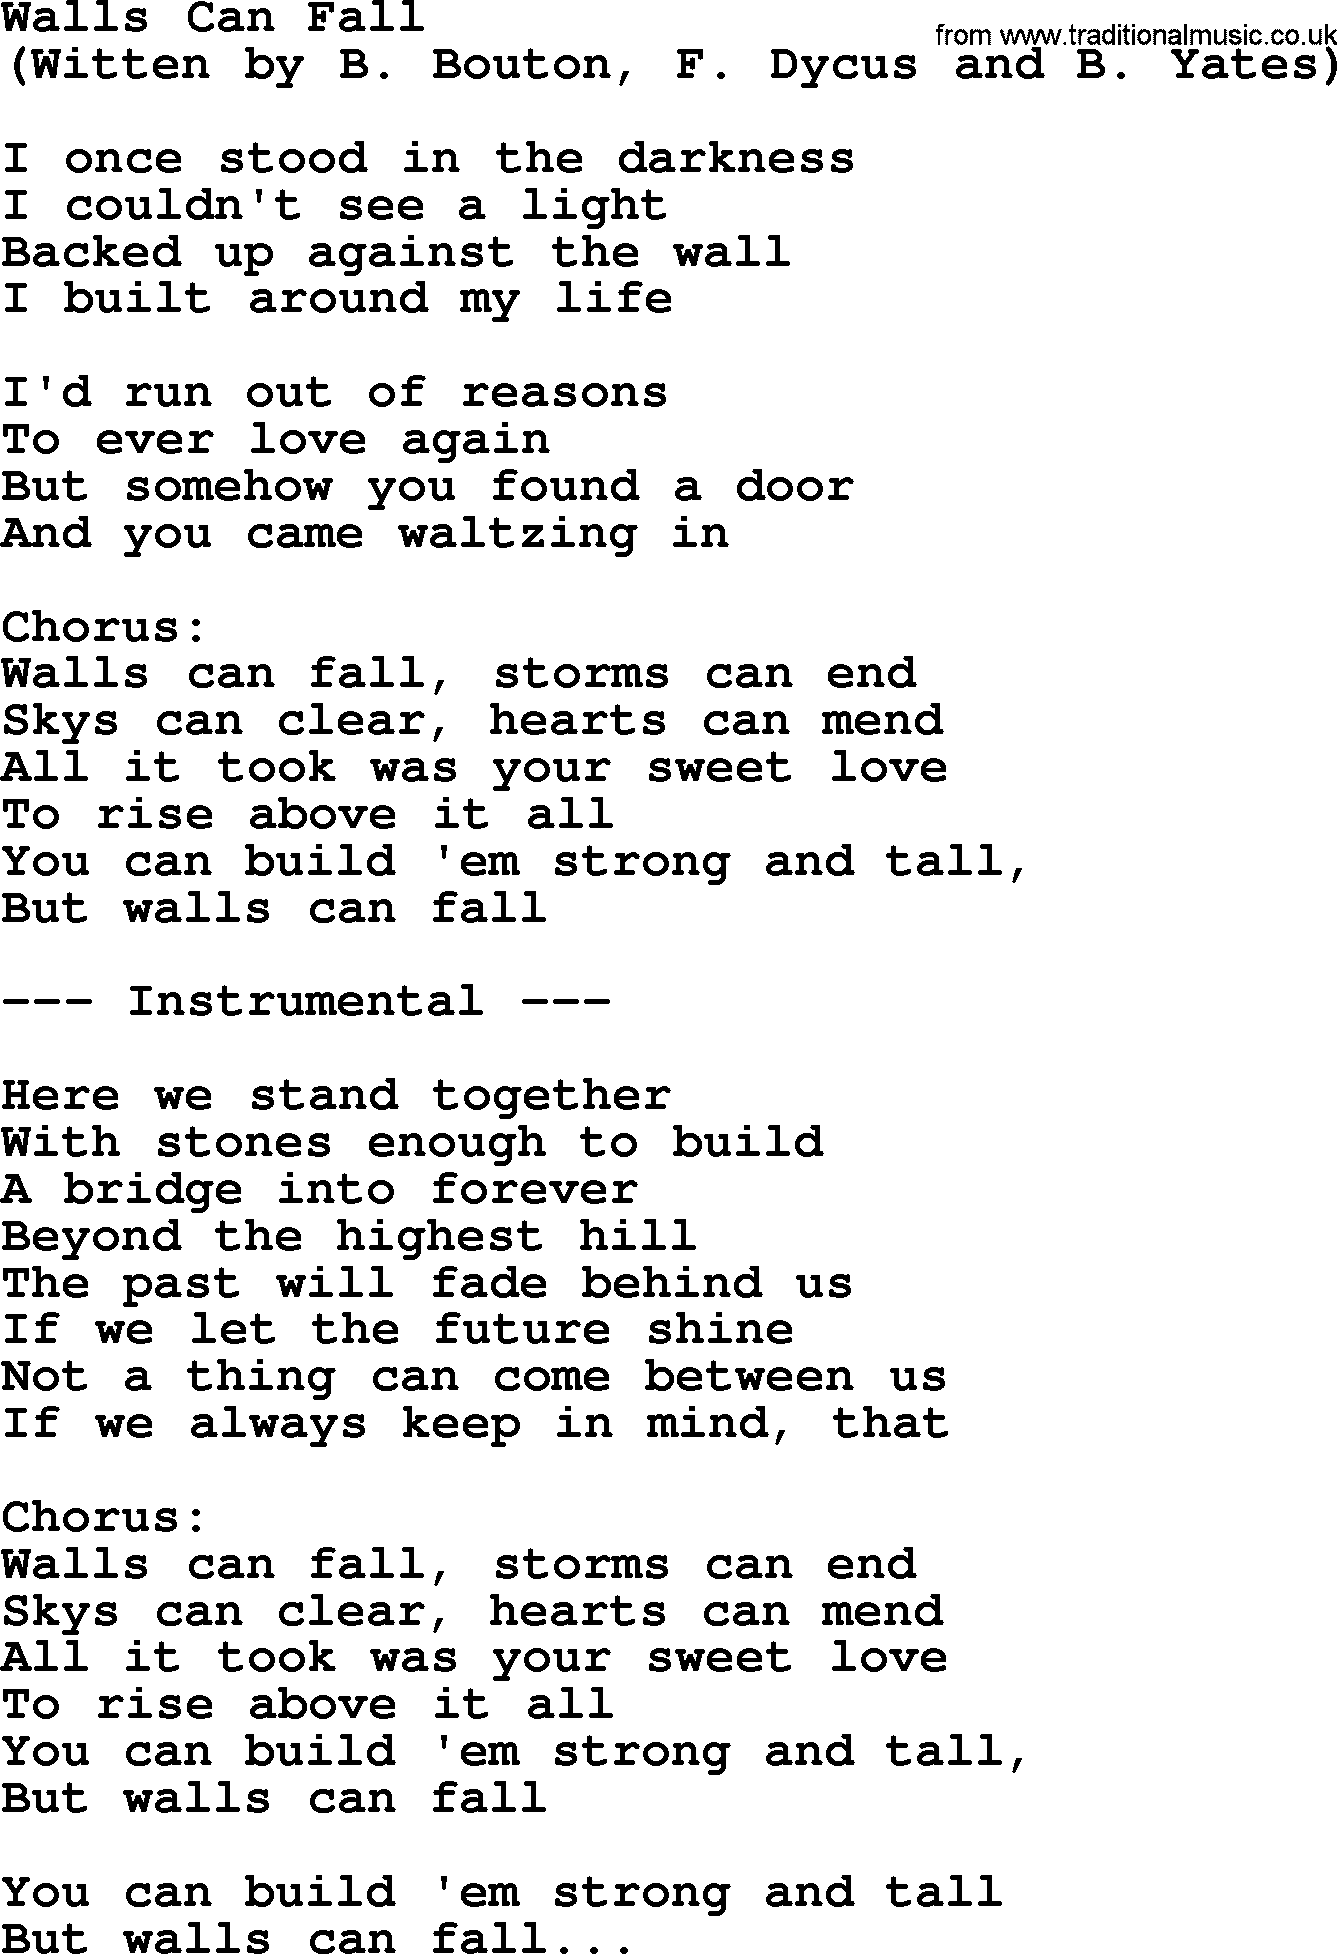 George Jones song: Walls Can Fall, lyrics